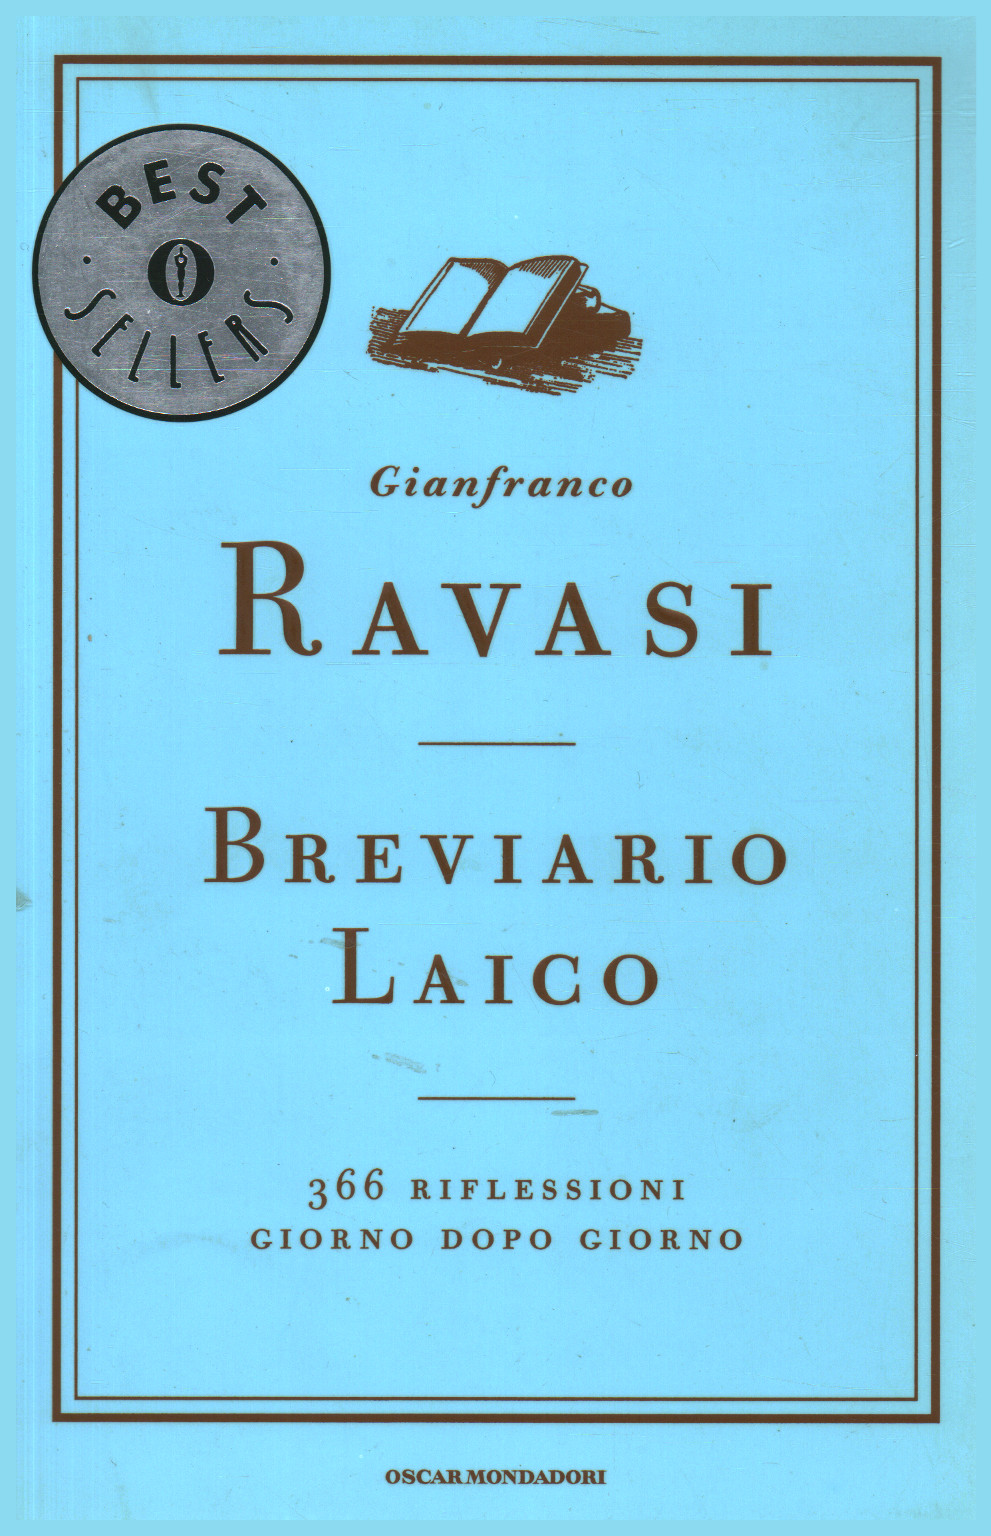 Lay breviary, Gianfranco Ravasi